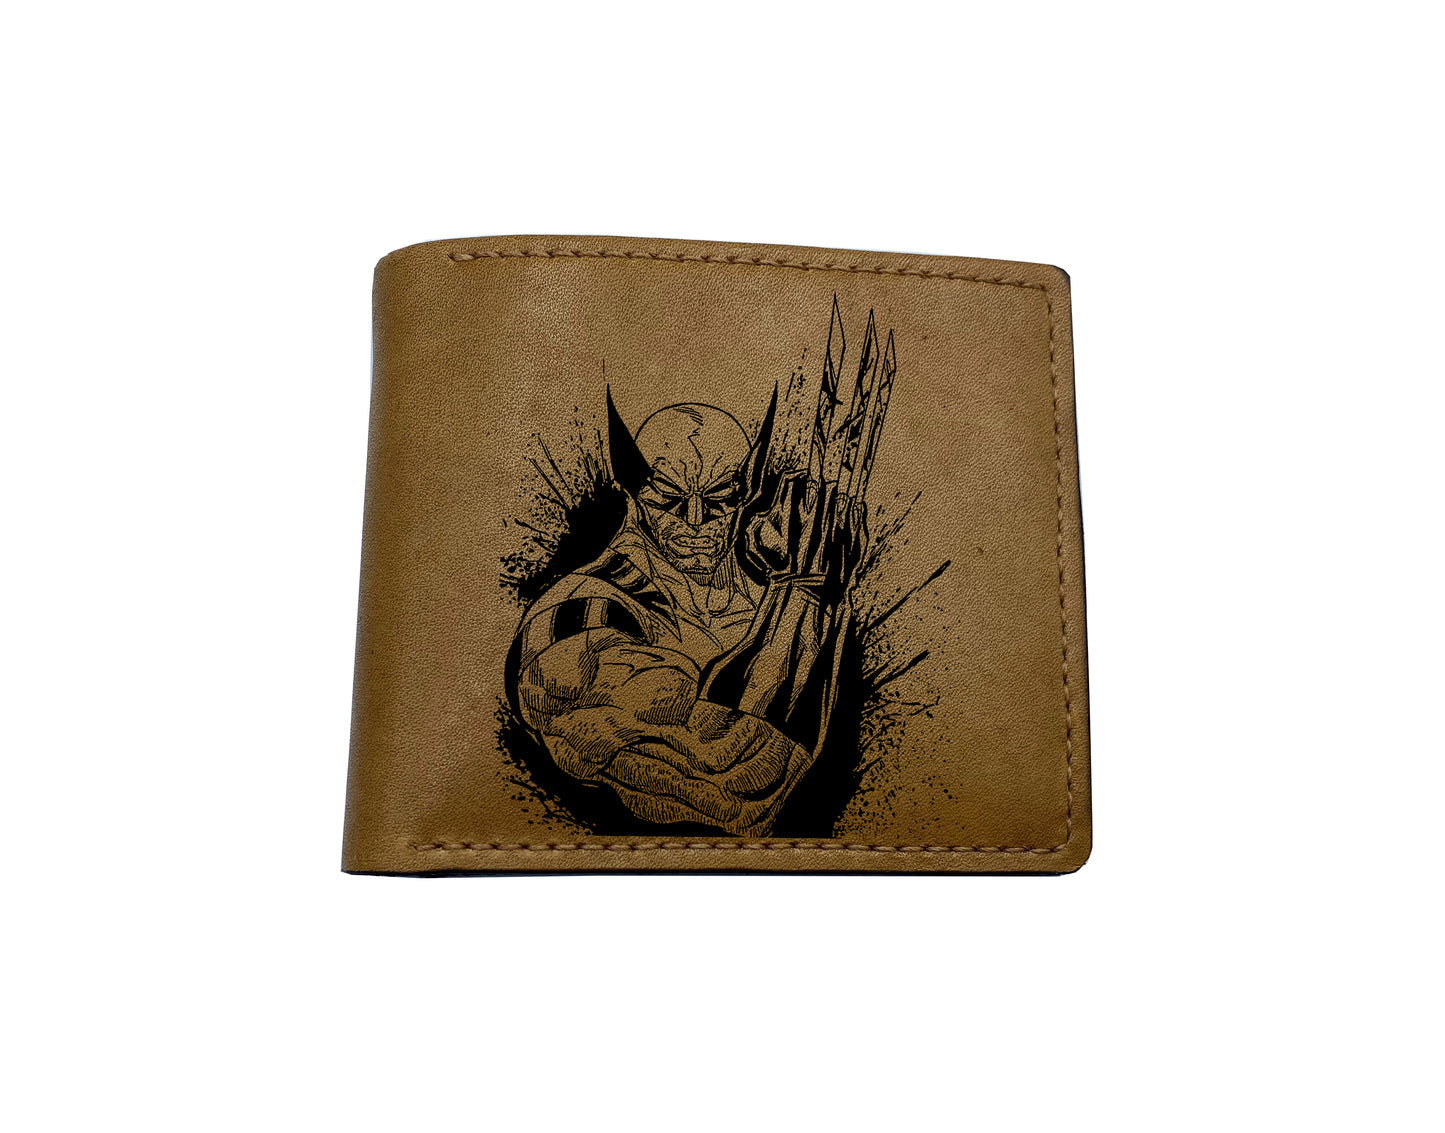 Mayan Corner - Wolverine Xmen superheroes leather handmade wallet, customized wallet for husband, boyfriend - 2710225